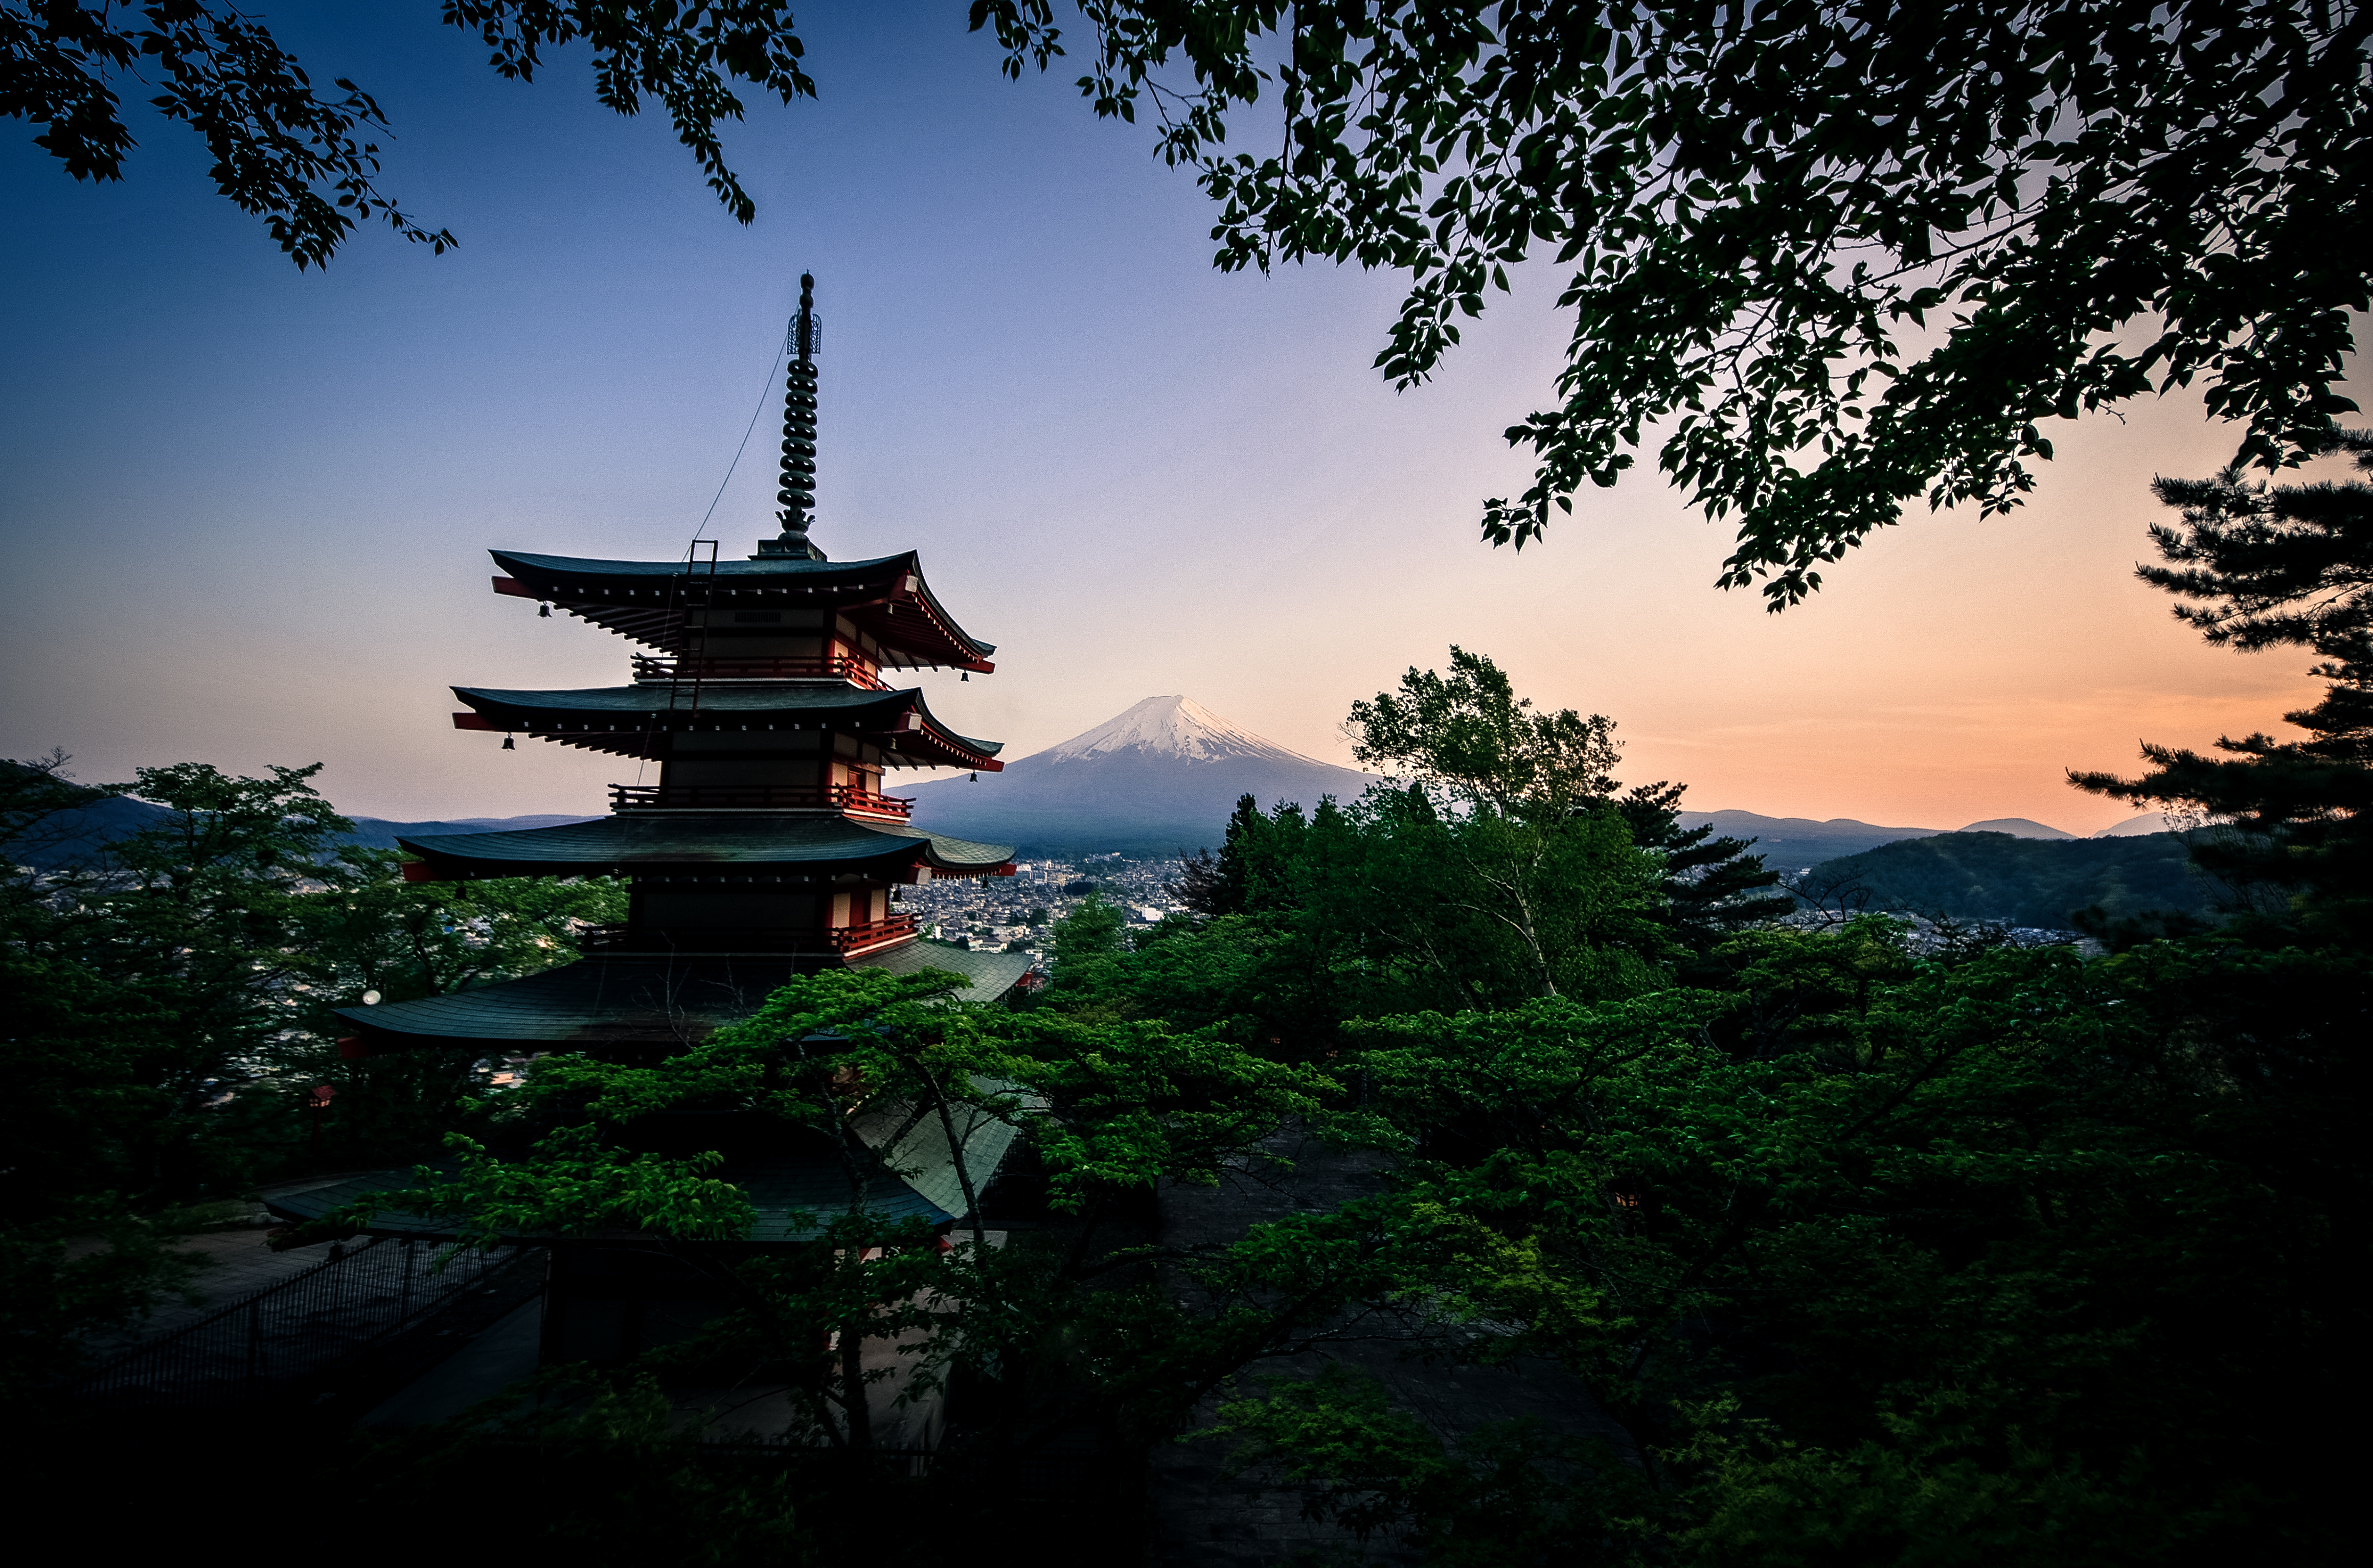 1523234 Bild herunterladen erde/natur, fujisan, japan, pagode, tempel, vulkan, vulkane - Hintergrundbilder und Bildschirmschoner kostenlos